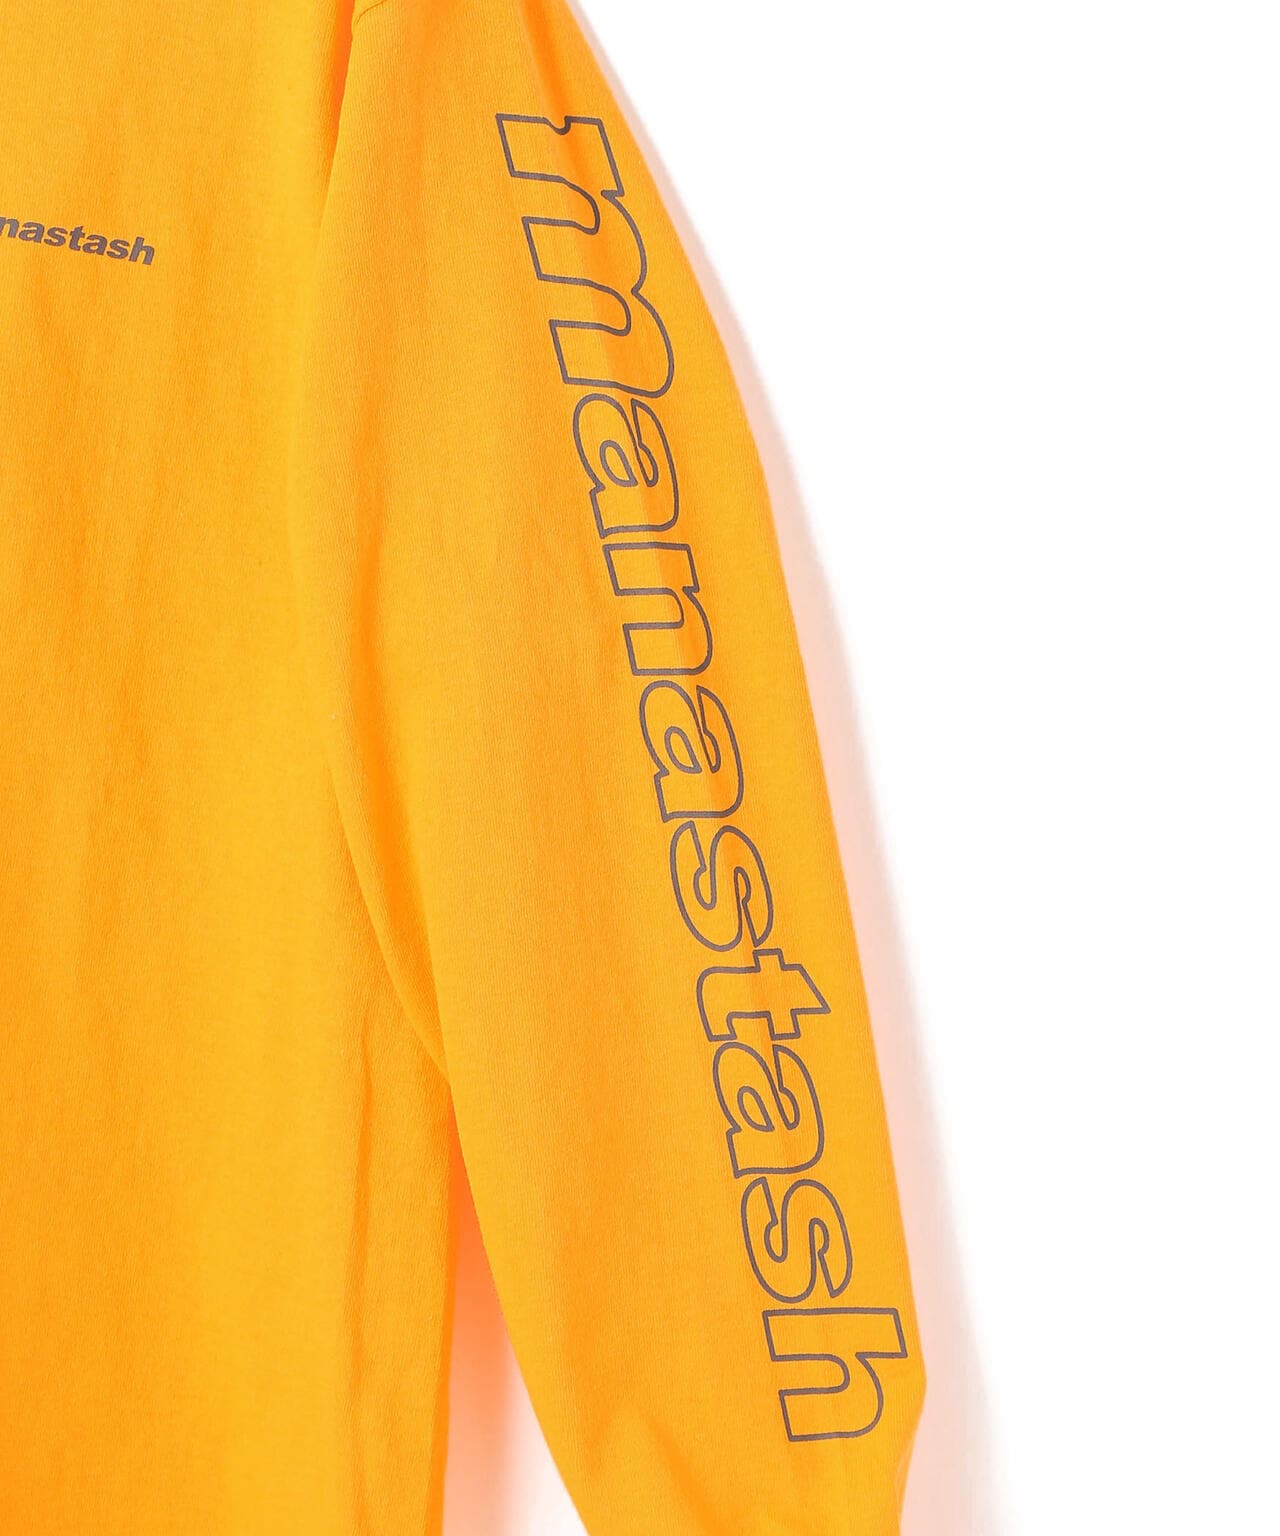 MANASTASH/マナスタッシュ/90s SleeveLogo L/S T-Shrits/袖ロゴロングスリーブTシャツ